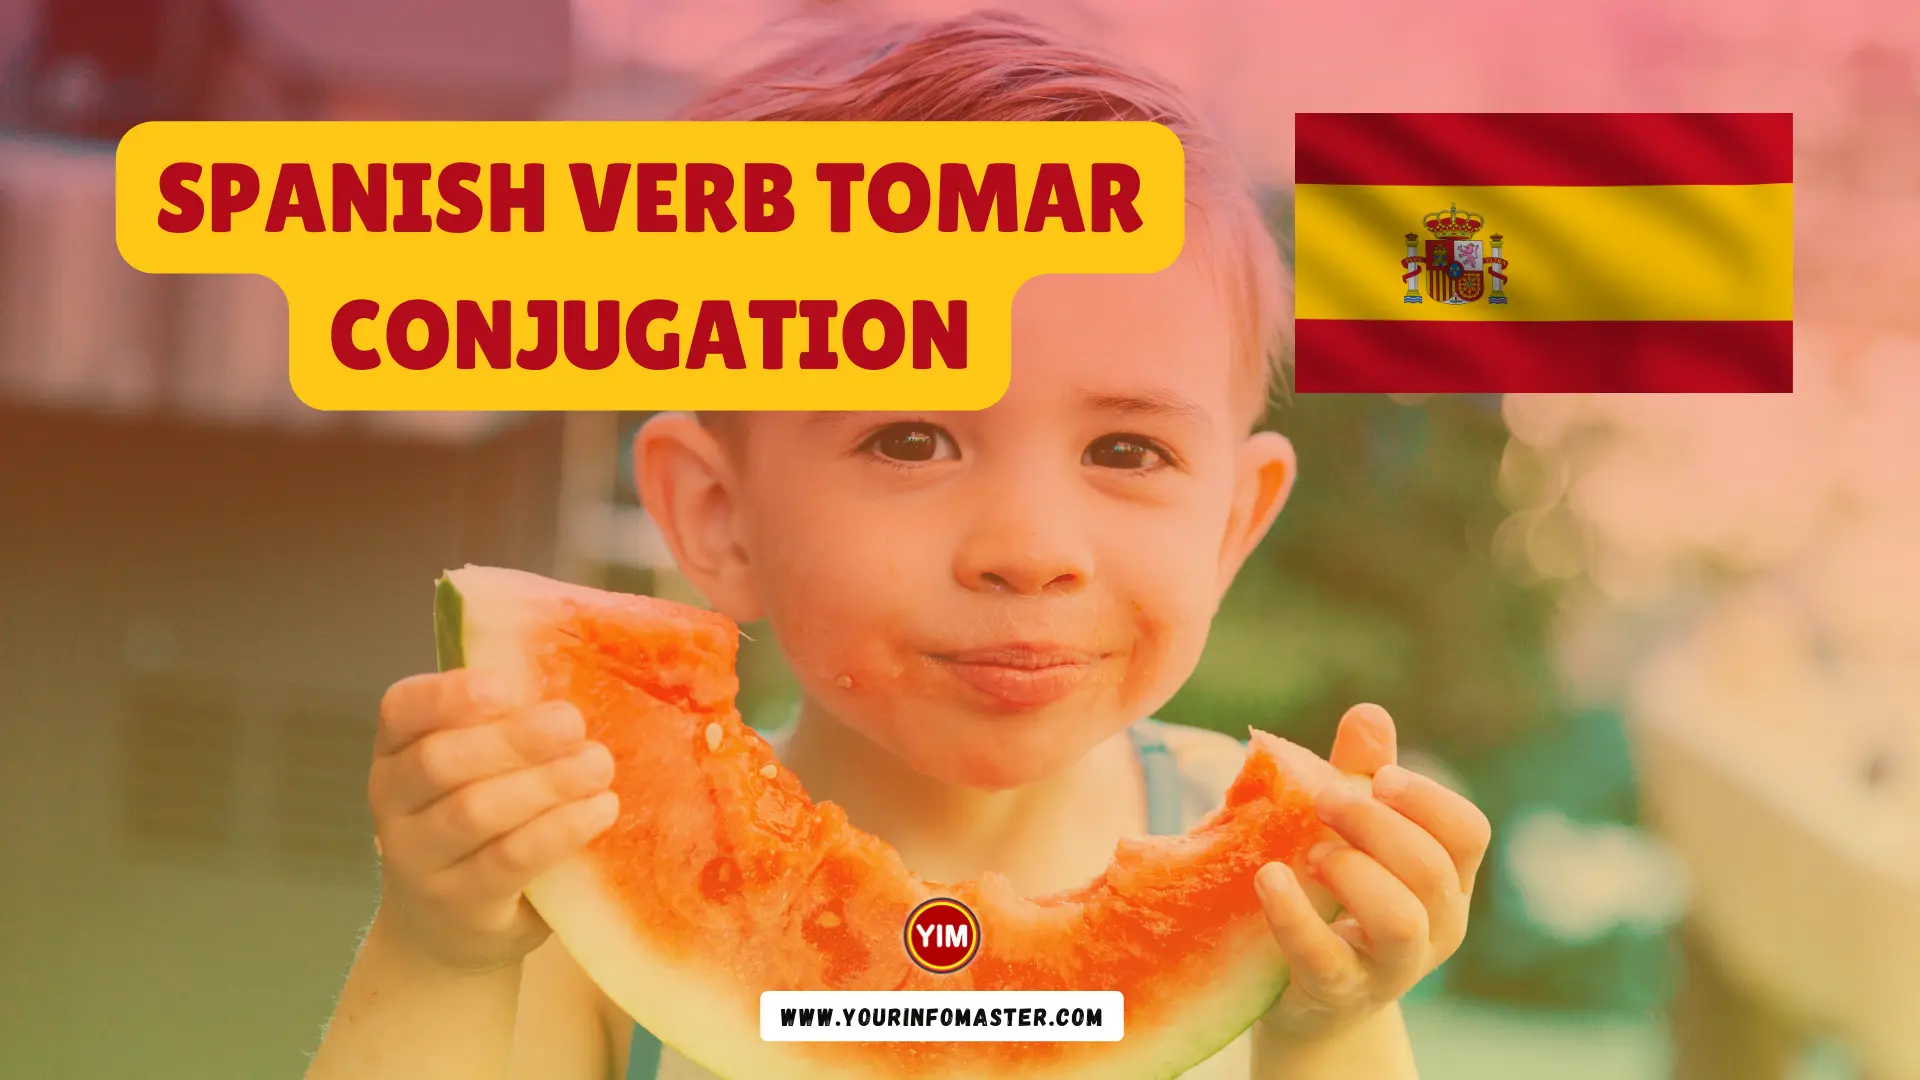 Spanish Verb Tomar Conjugation